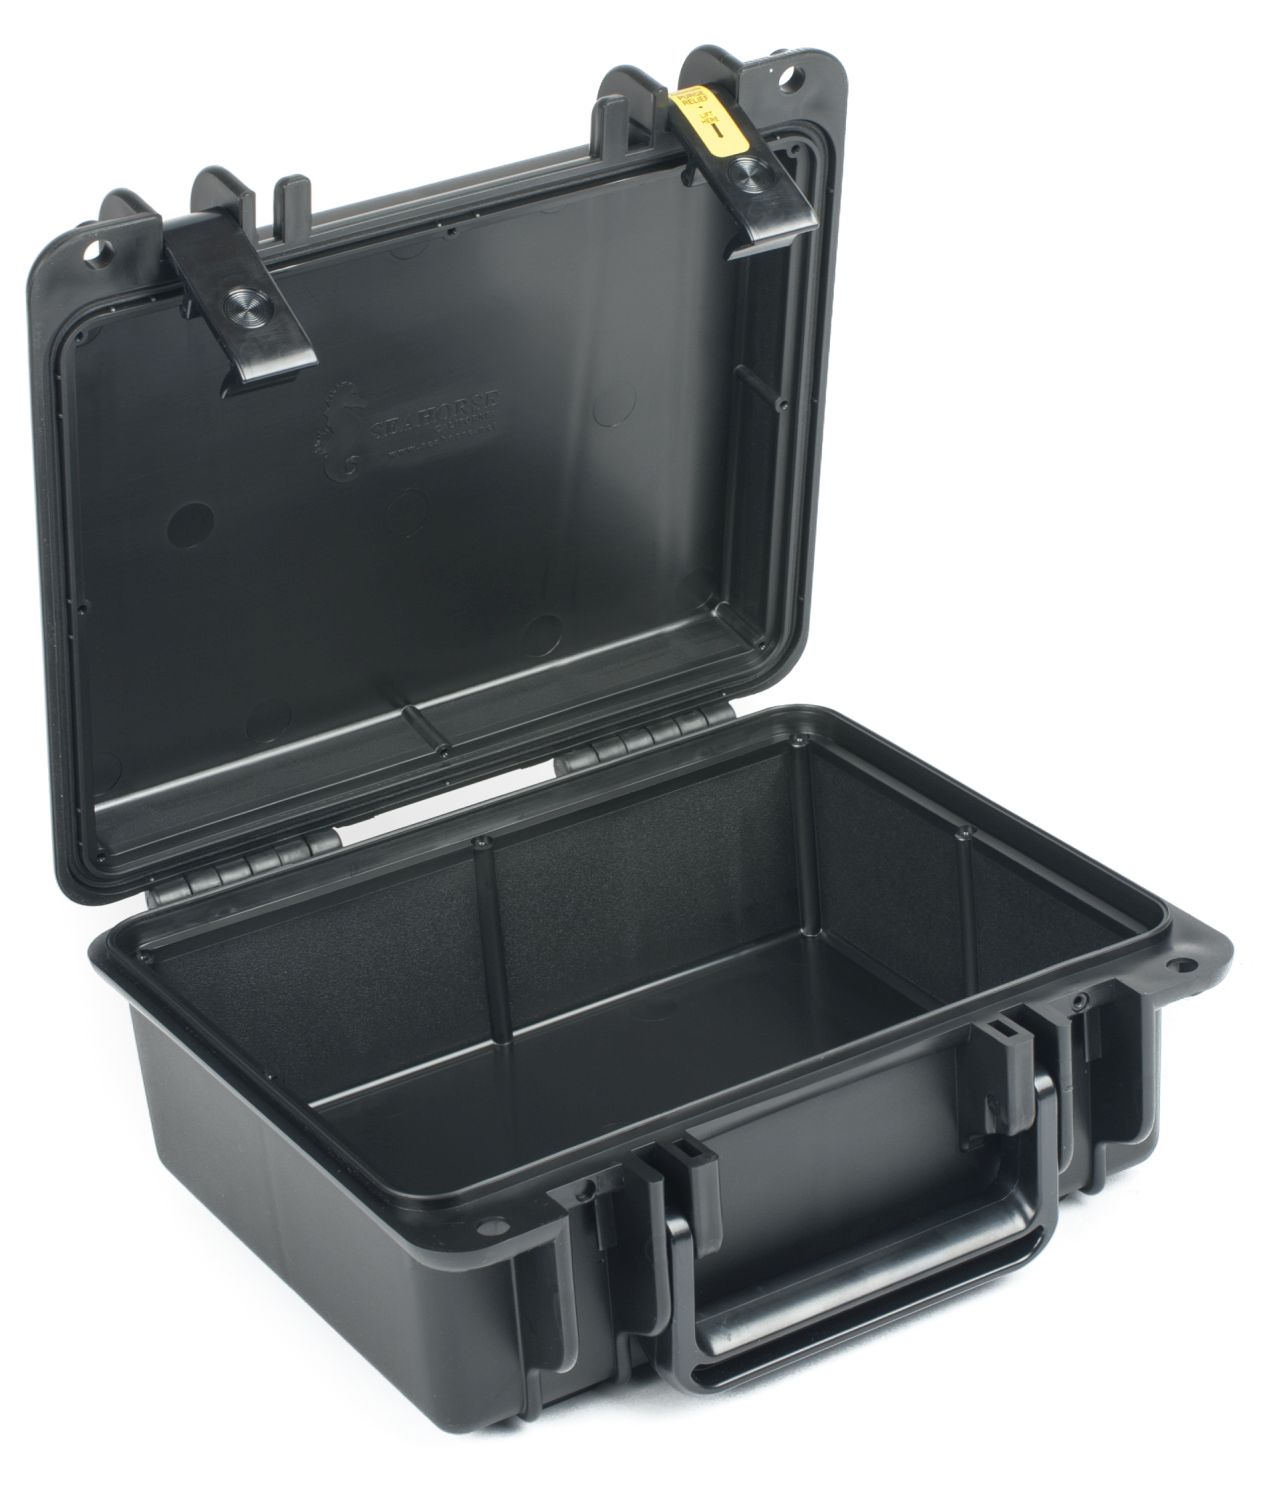 Seahorse SE300 Waterproof Carrying Case, 9.5 x 7.4 x 4.1